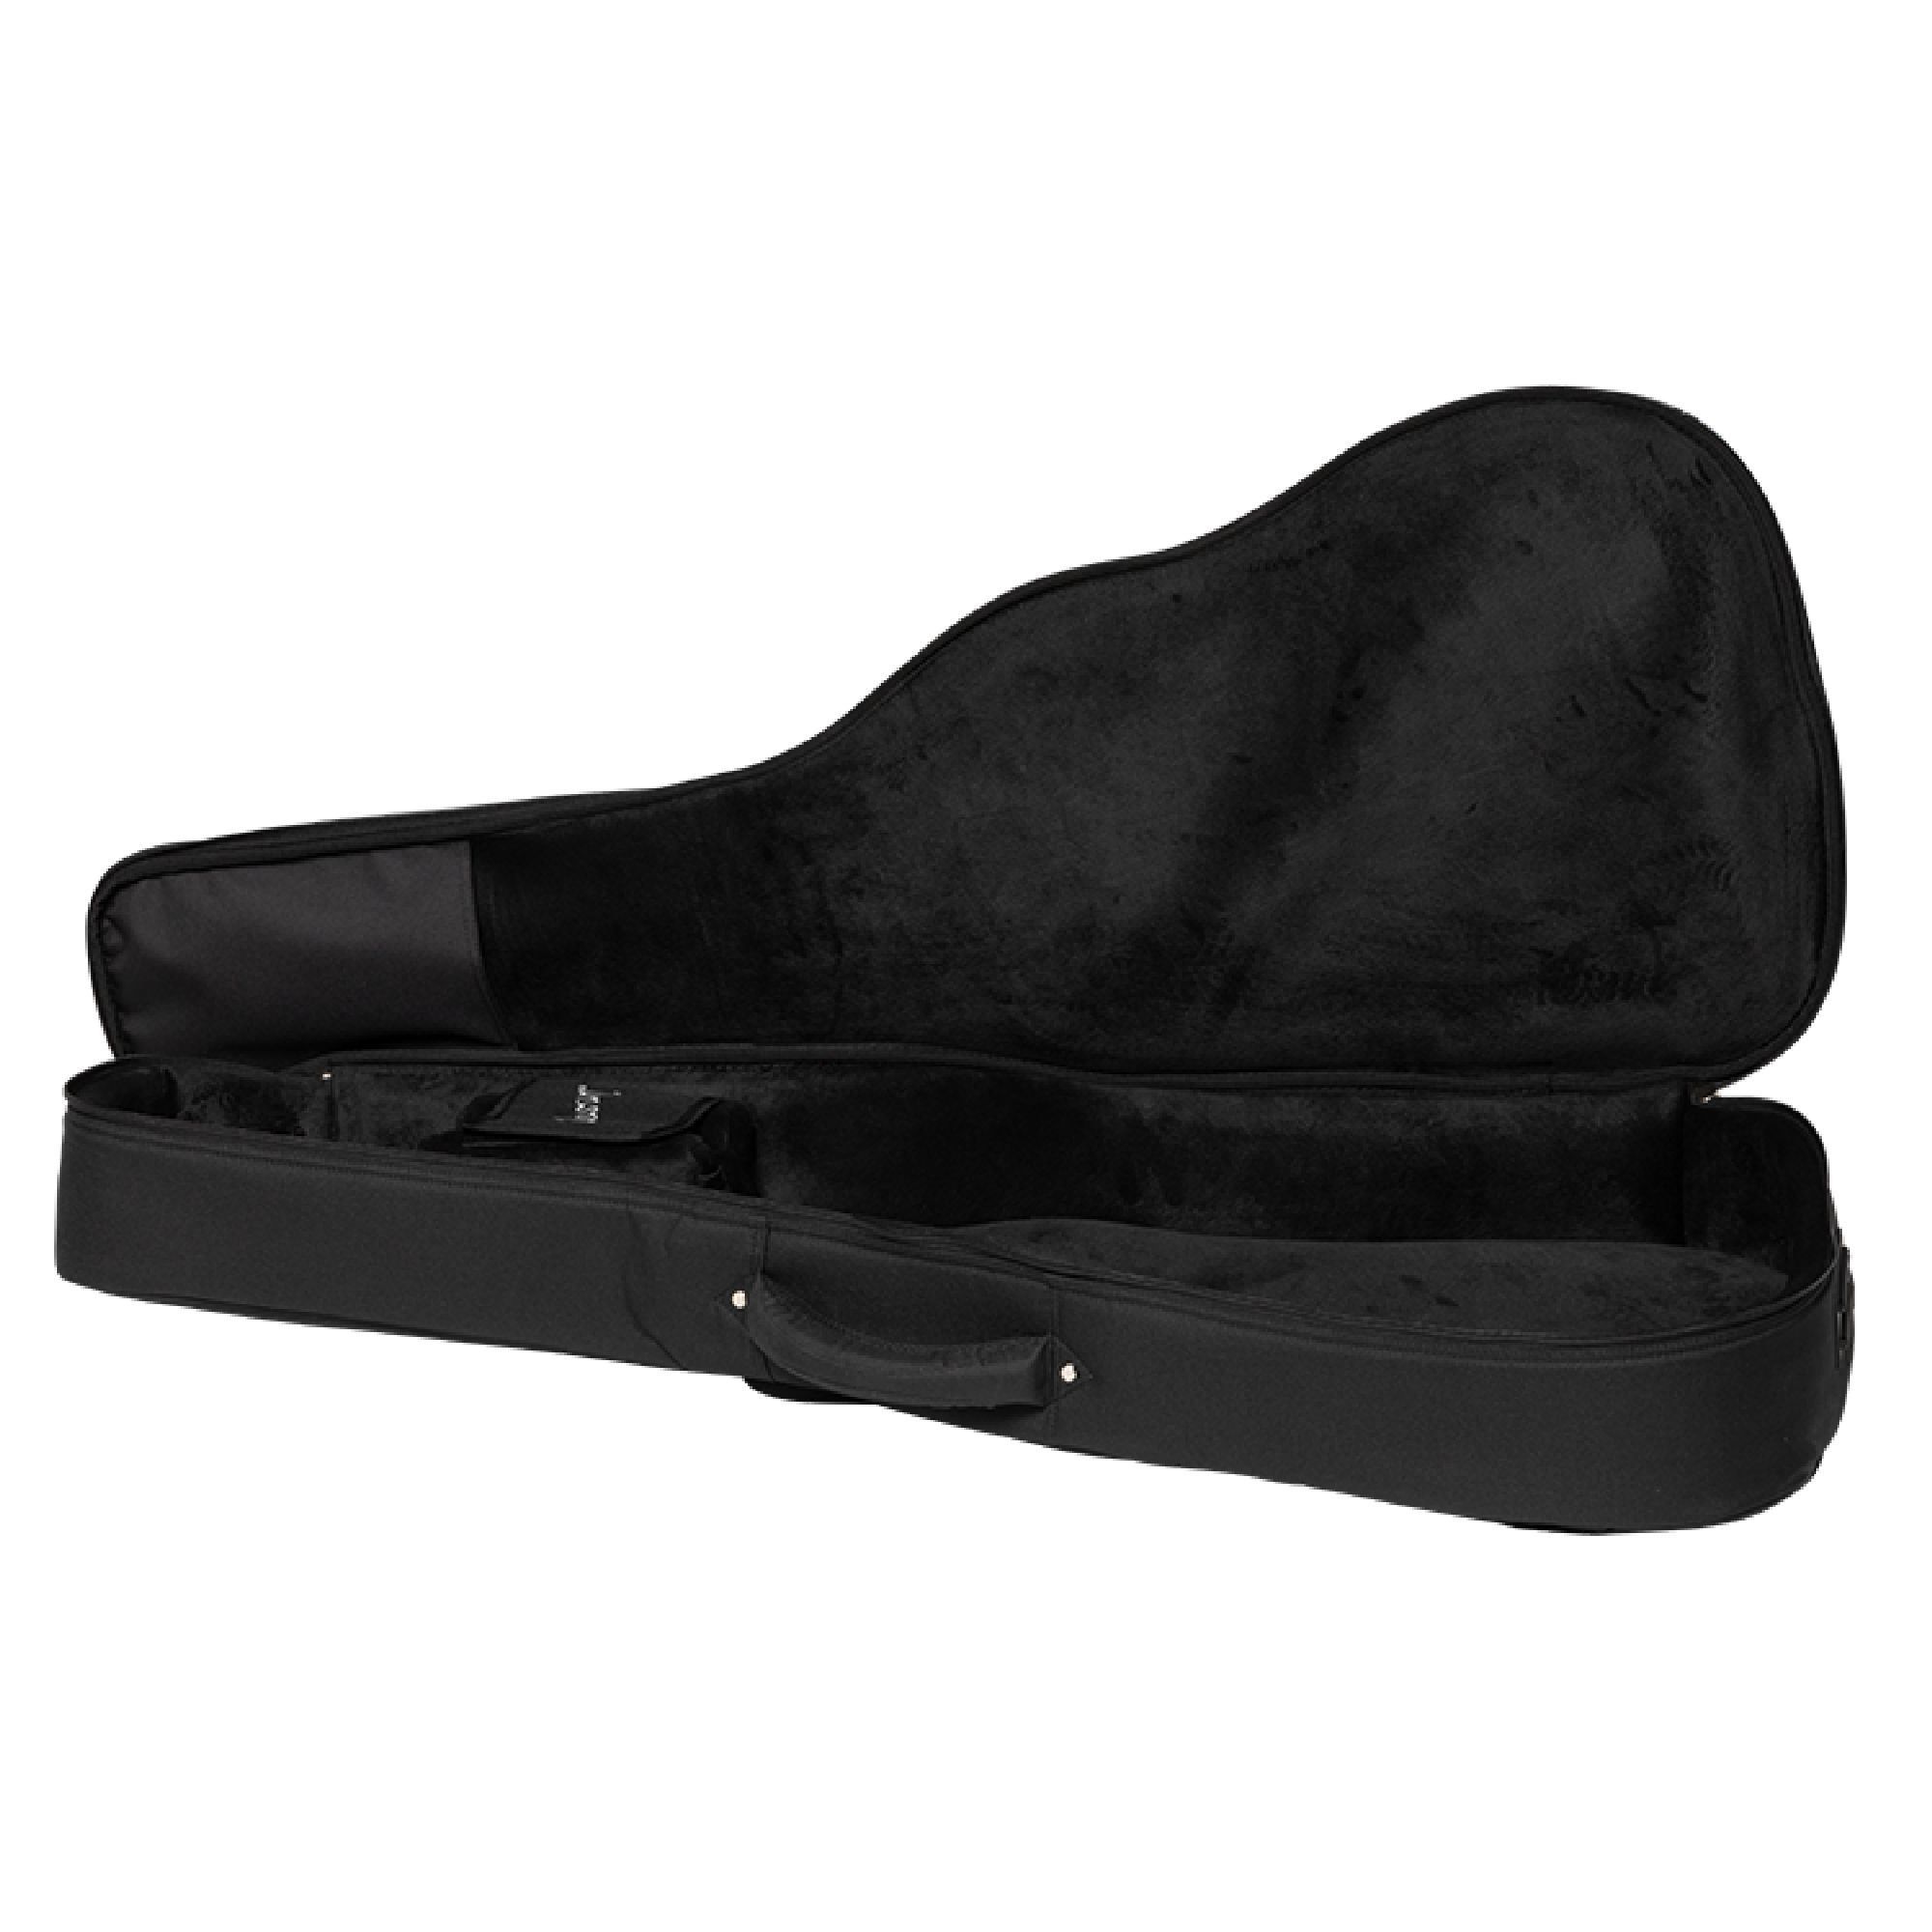 Gibson Premium Gigbag, Dreadnought / Square Shoulder Black Чехлы и кейсы для гитар